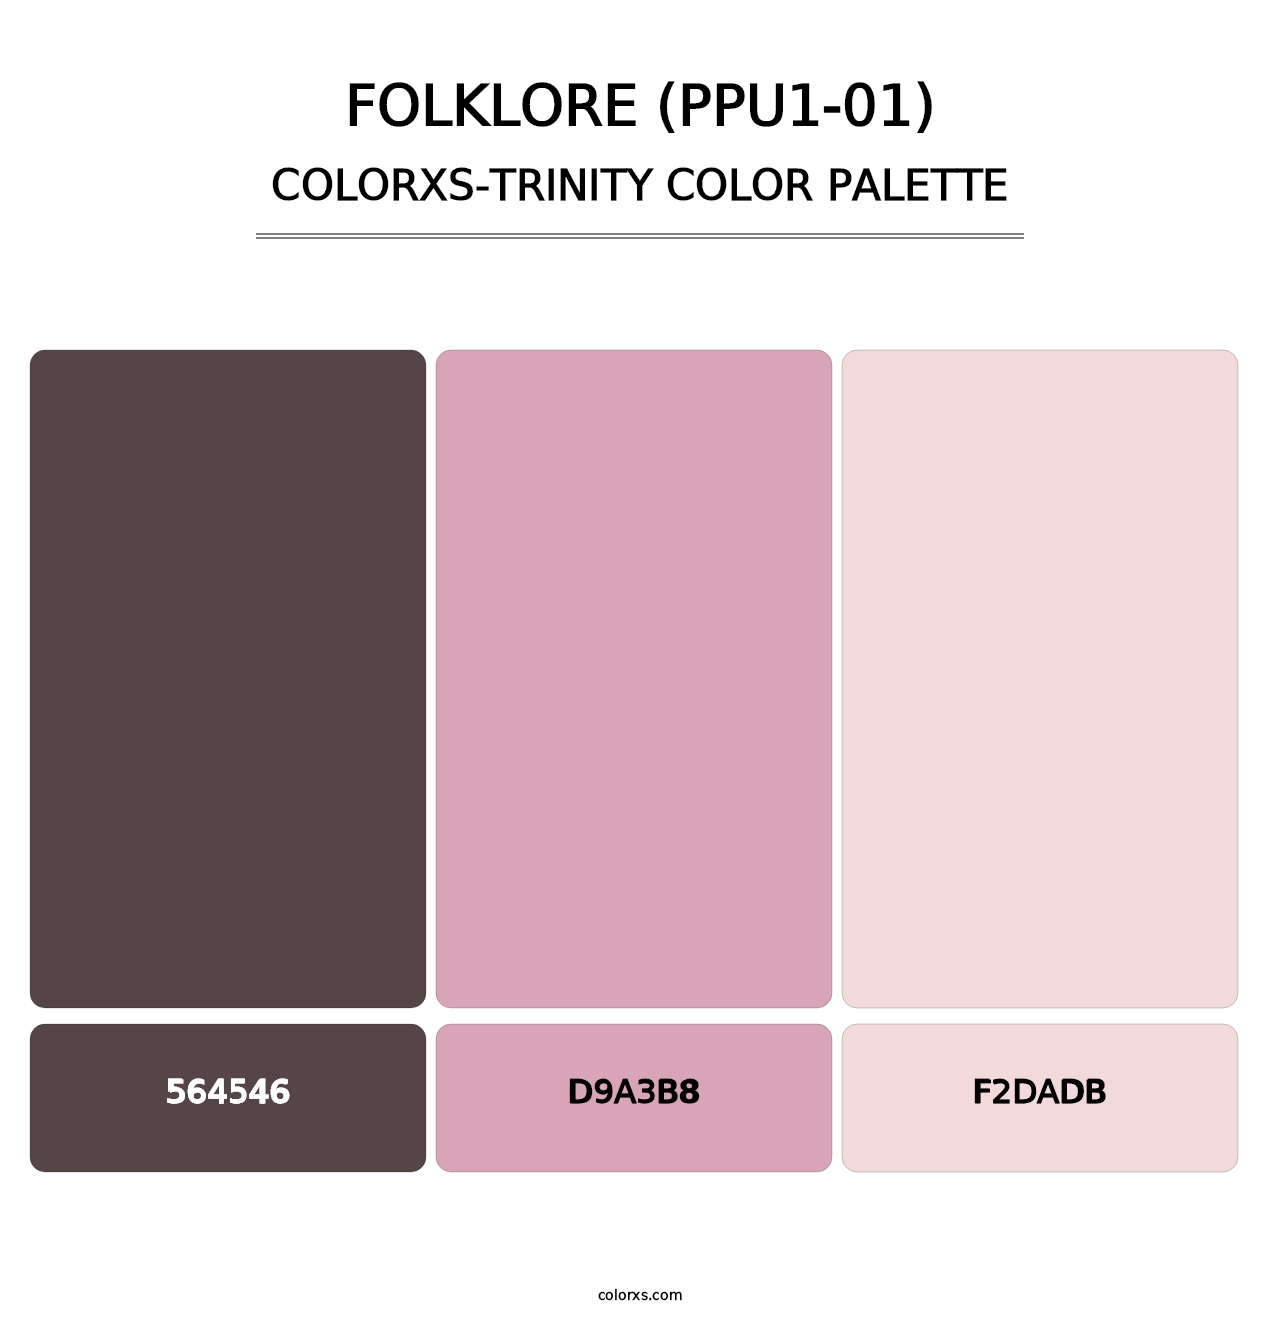 Folklore (PPU1-01) - Colorxs Trinity Palette